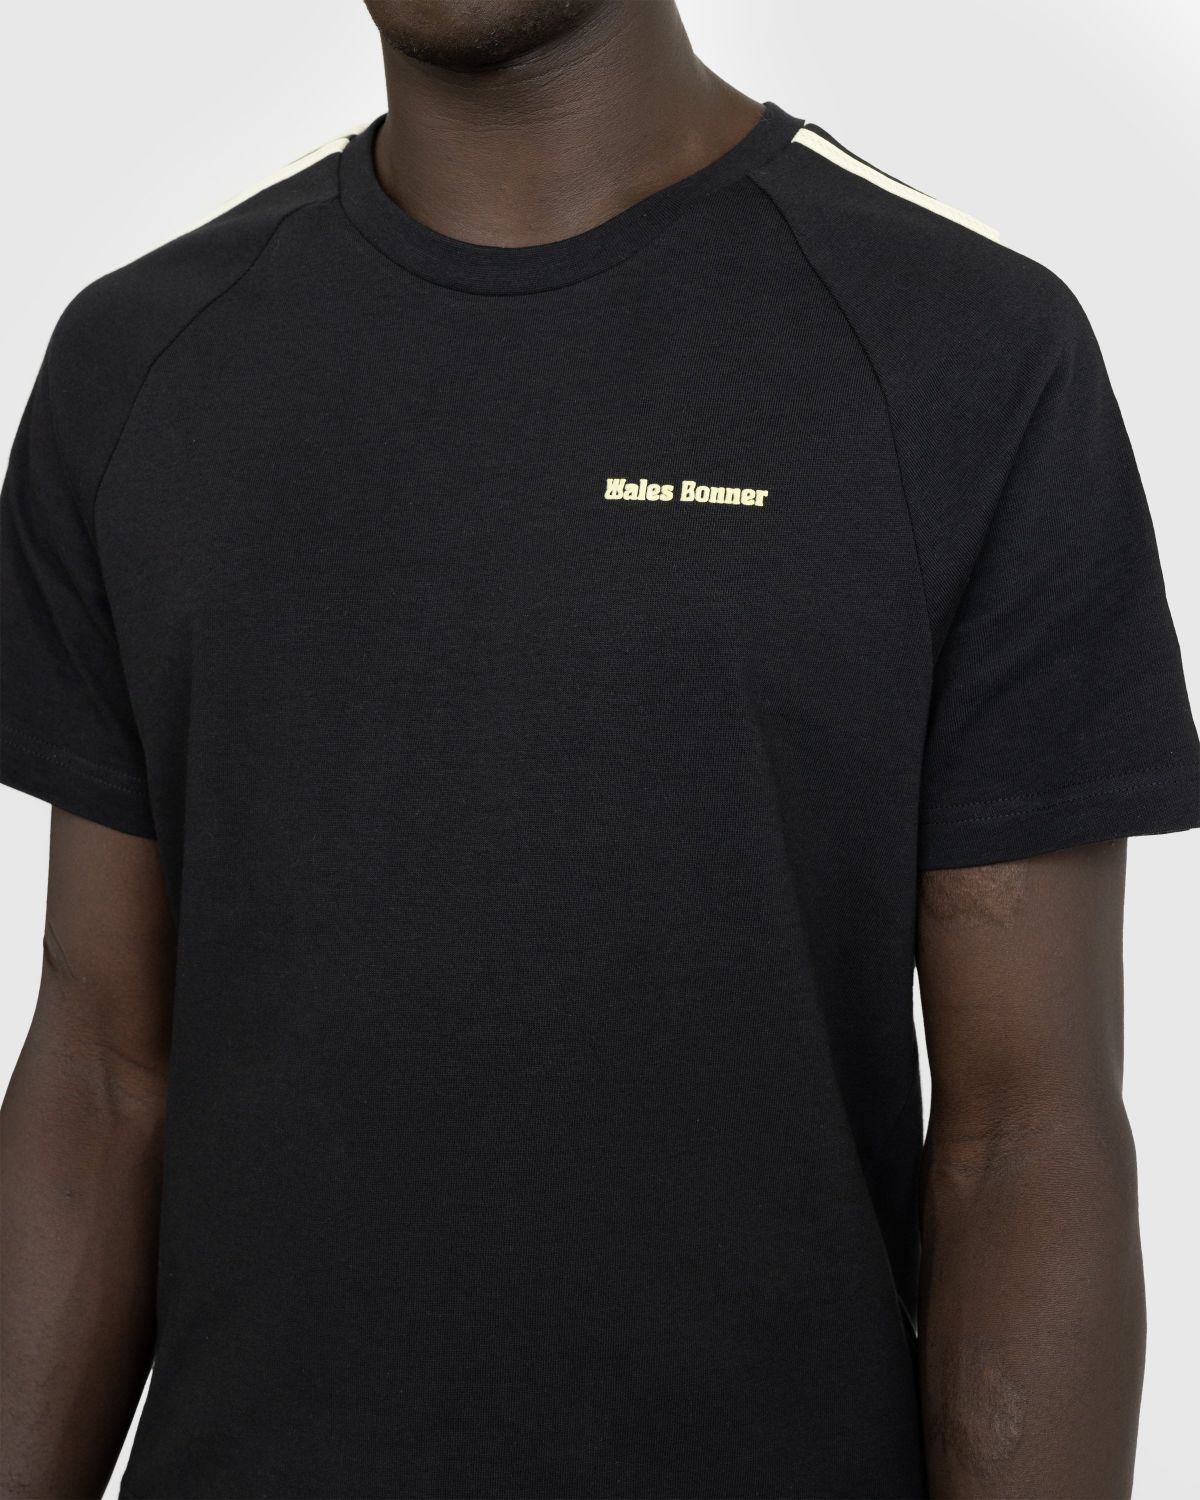 Adidas x Wales Bonner – Organic Cotton Tee Black - T-shirts - Black - Image 5